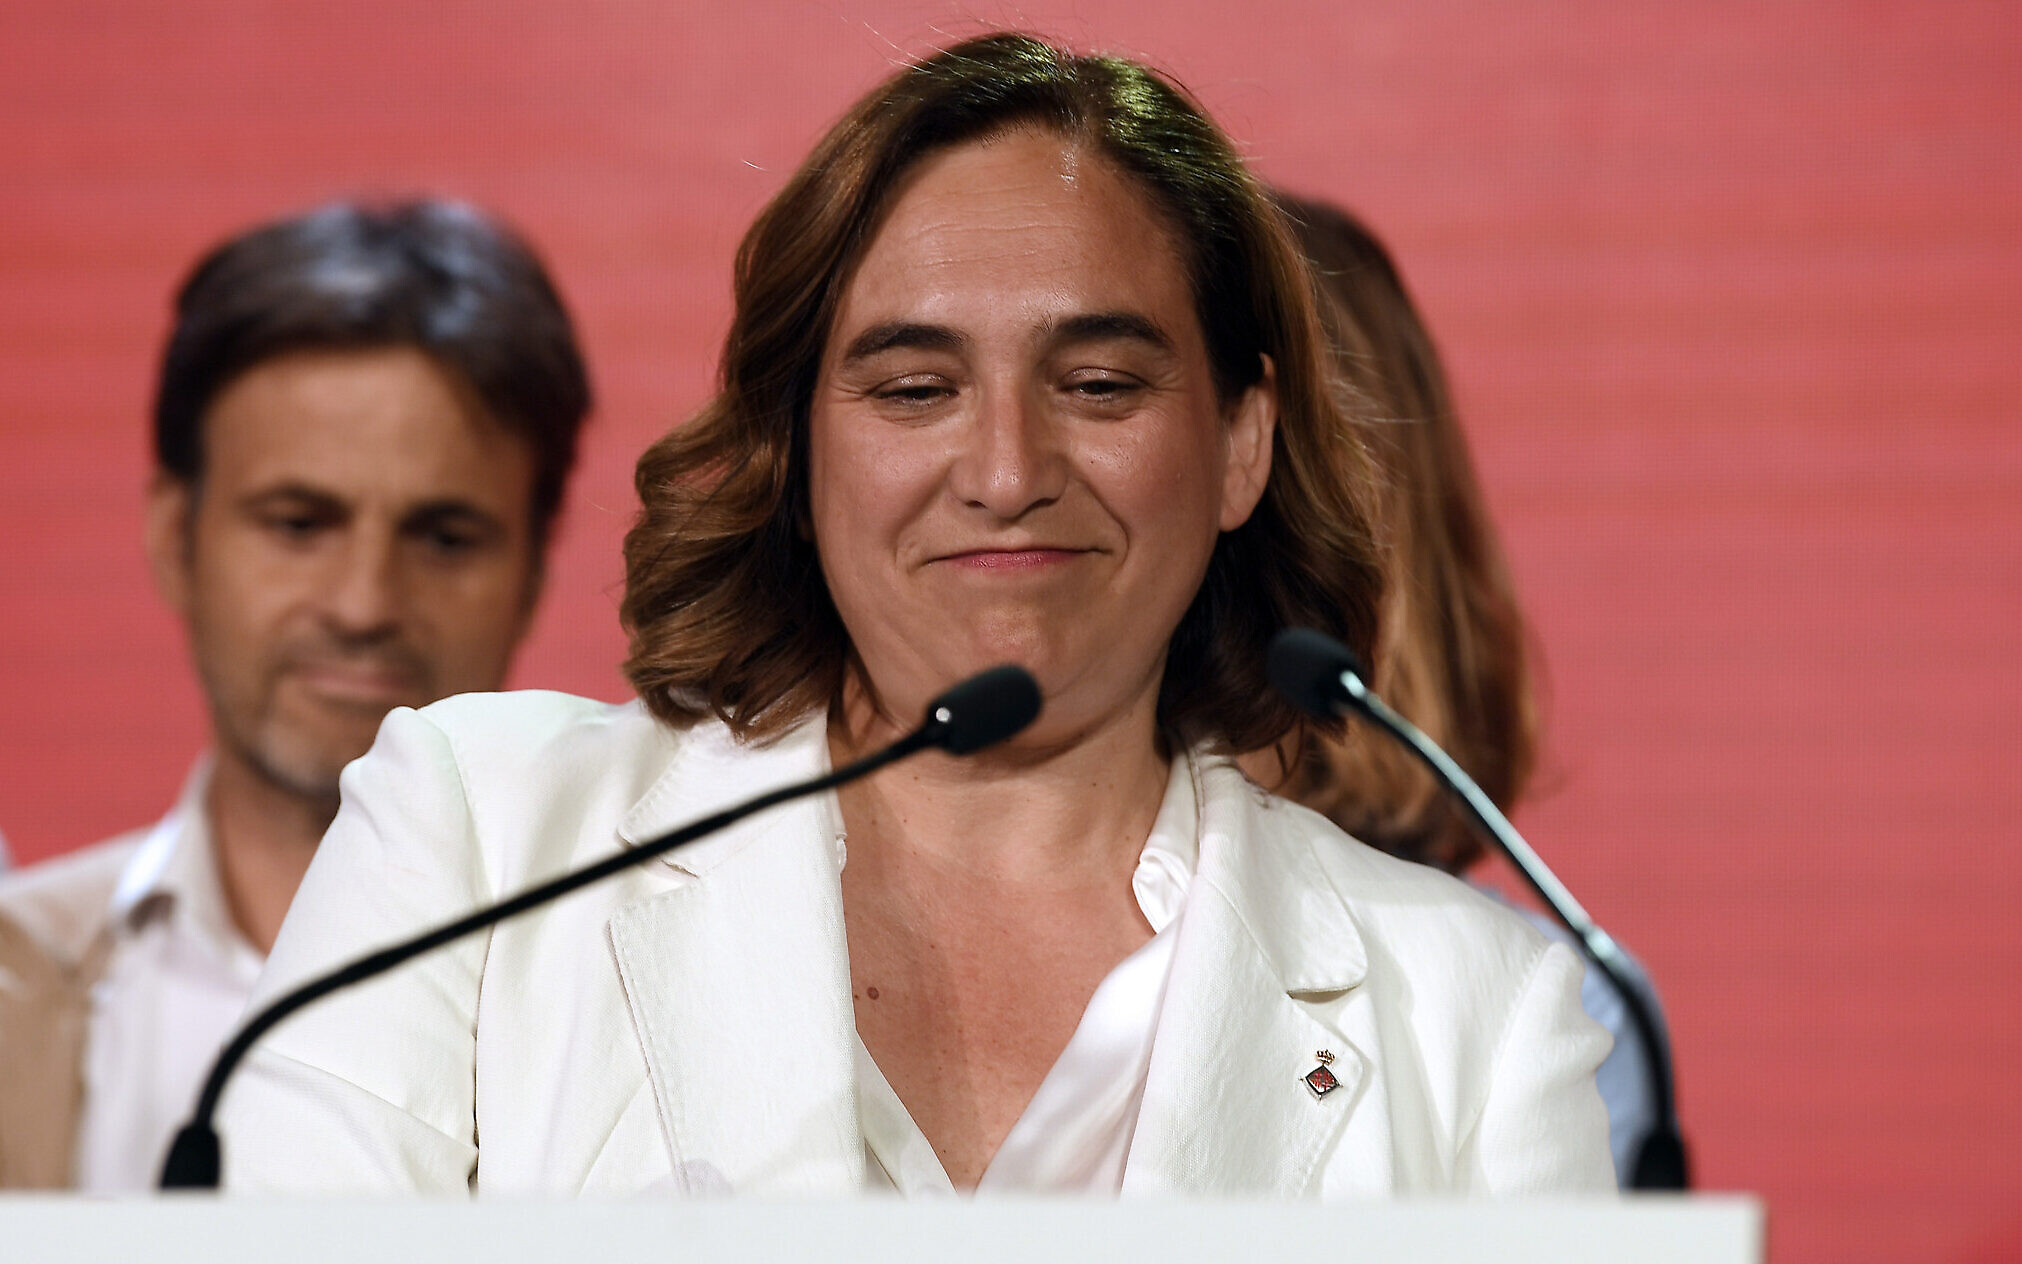 Barcelona mayor who cut ties with Tel Aviv loses reelection bid | The ...